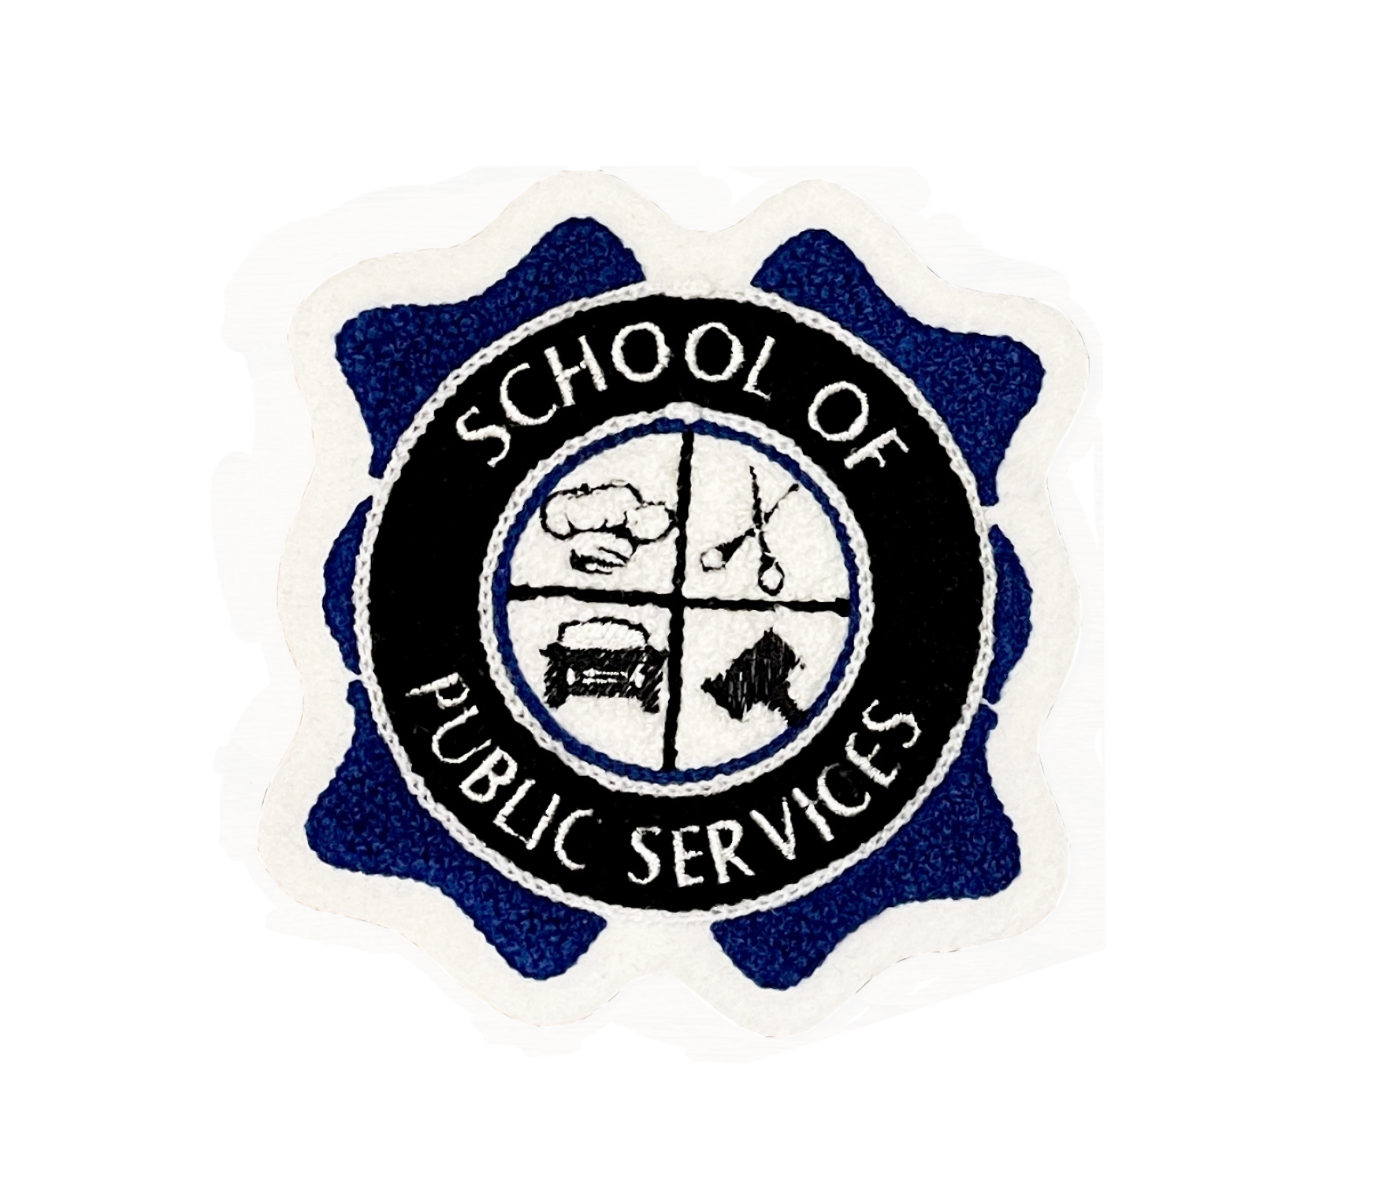 KISD School of Public Services Sleeve Patch